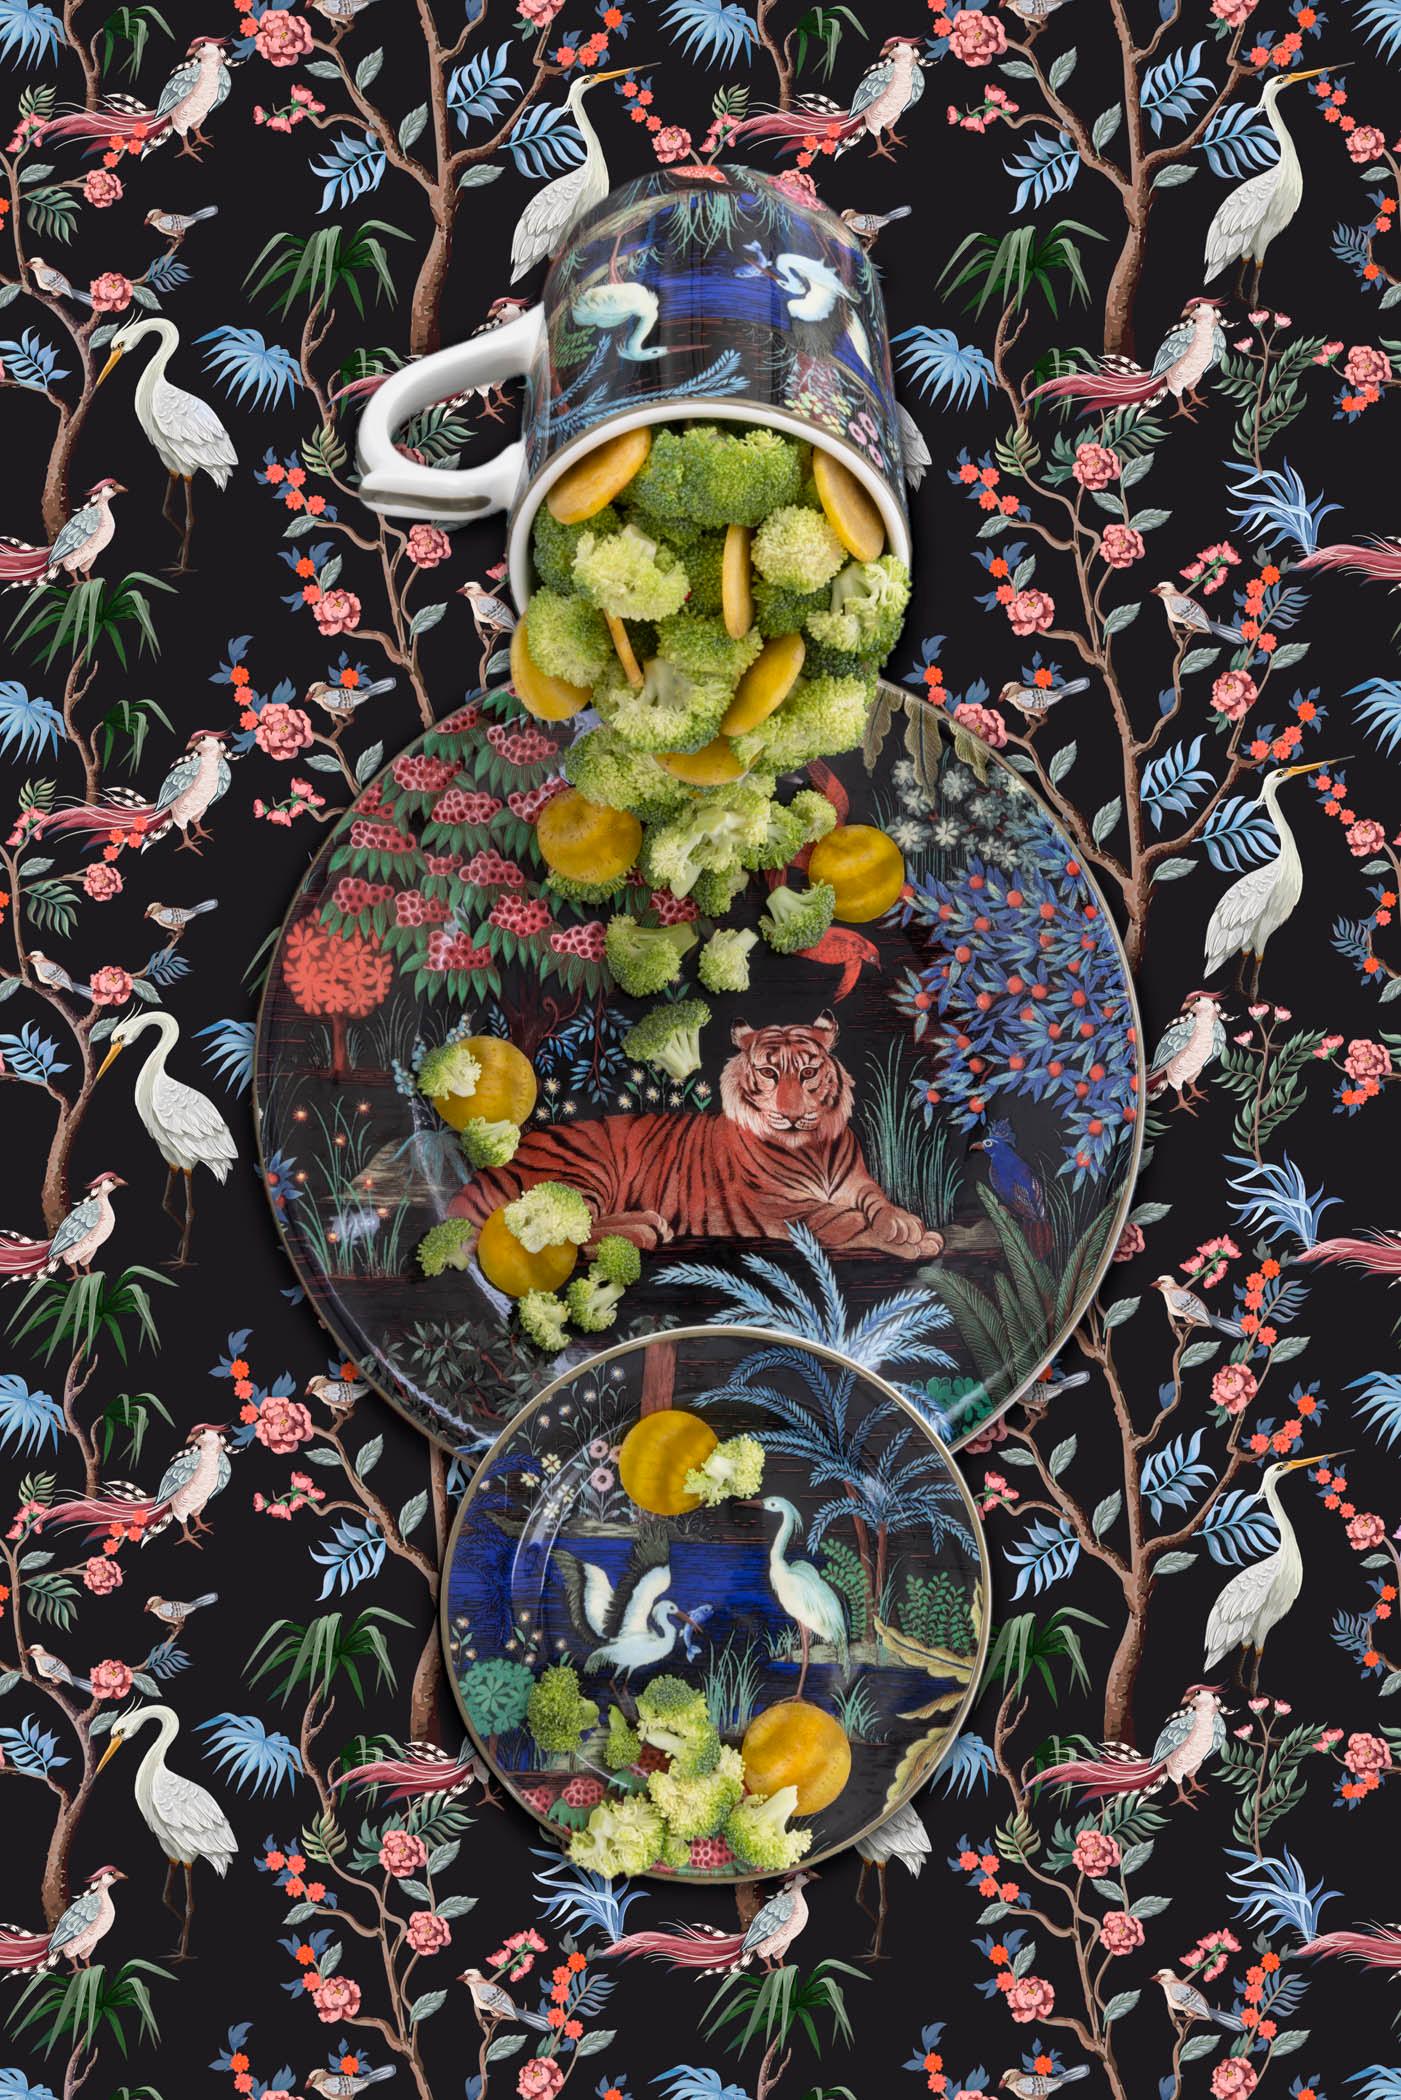 JP Terlizzi Color Photograph - Gien Jardin du Palais with Broccoli Tiger Beets, limited edition photograph 